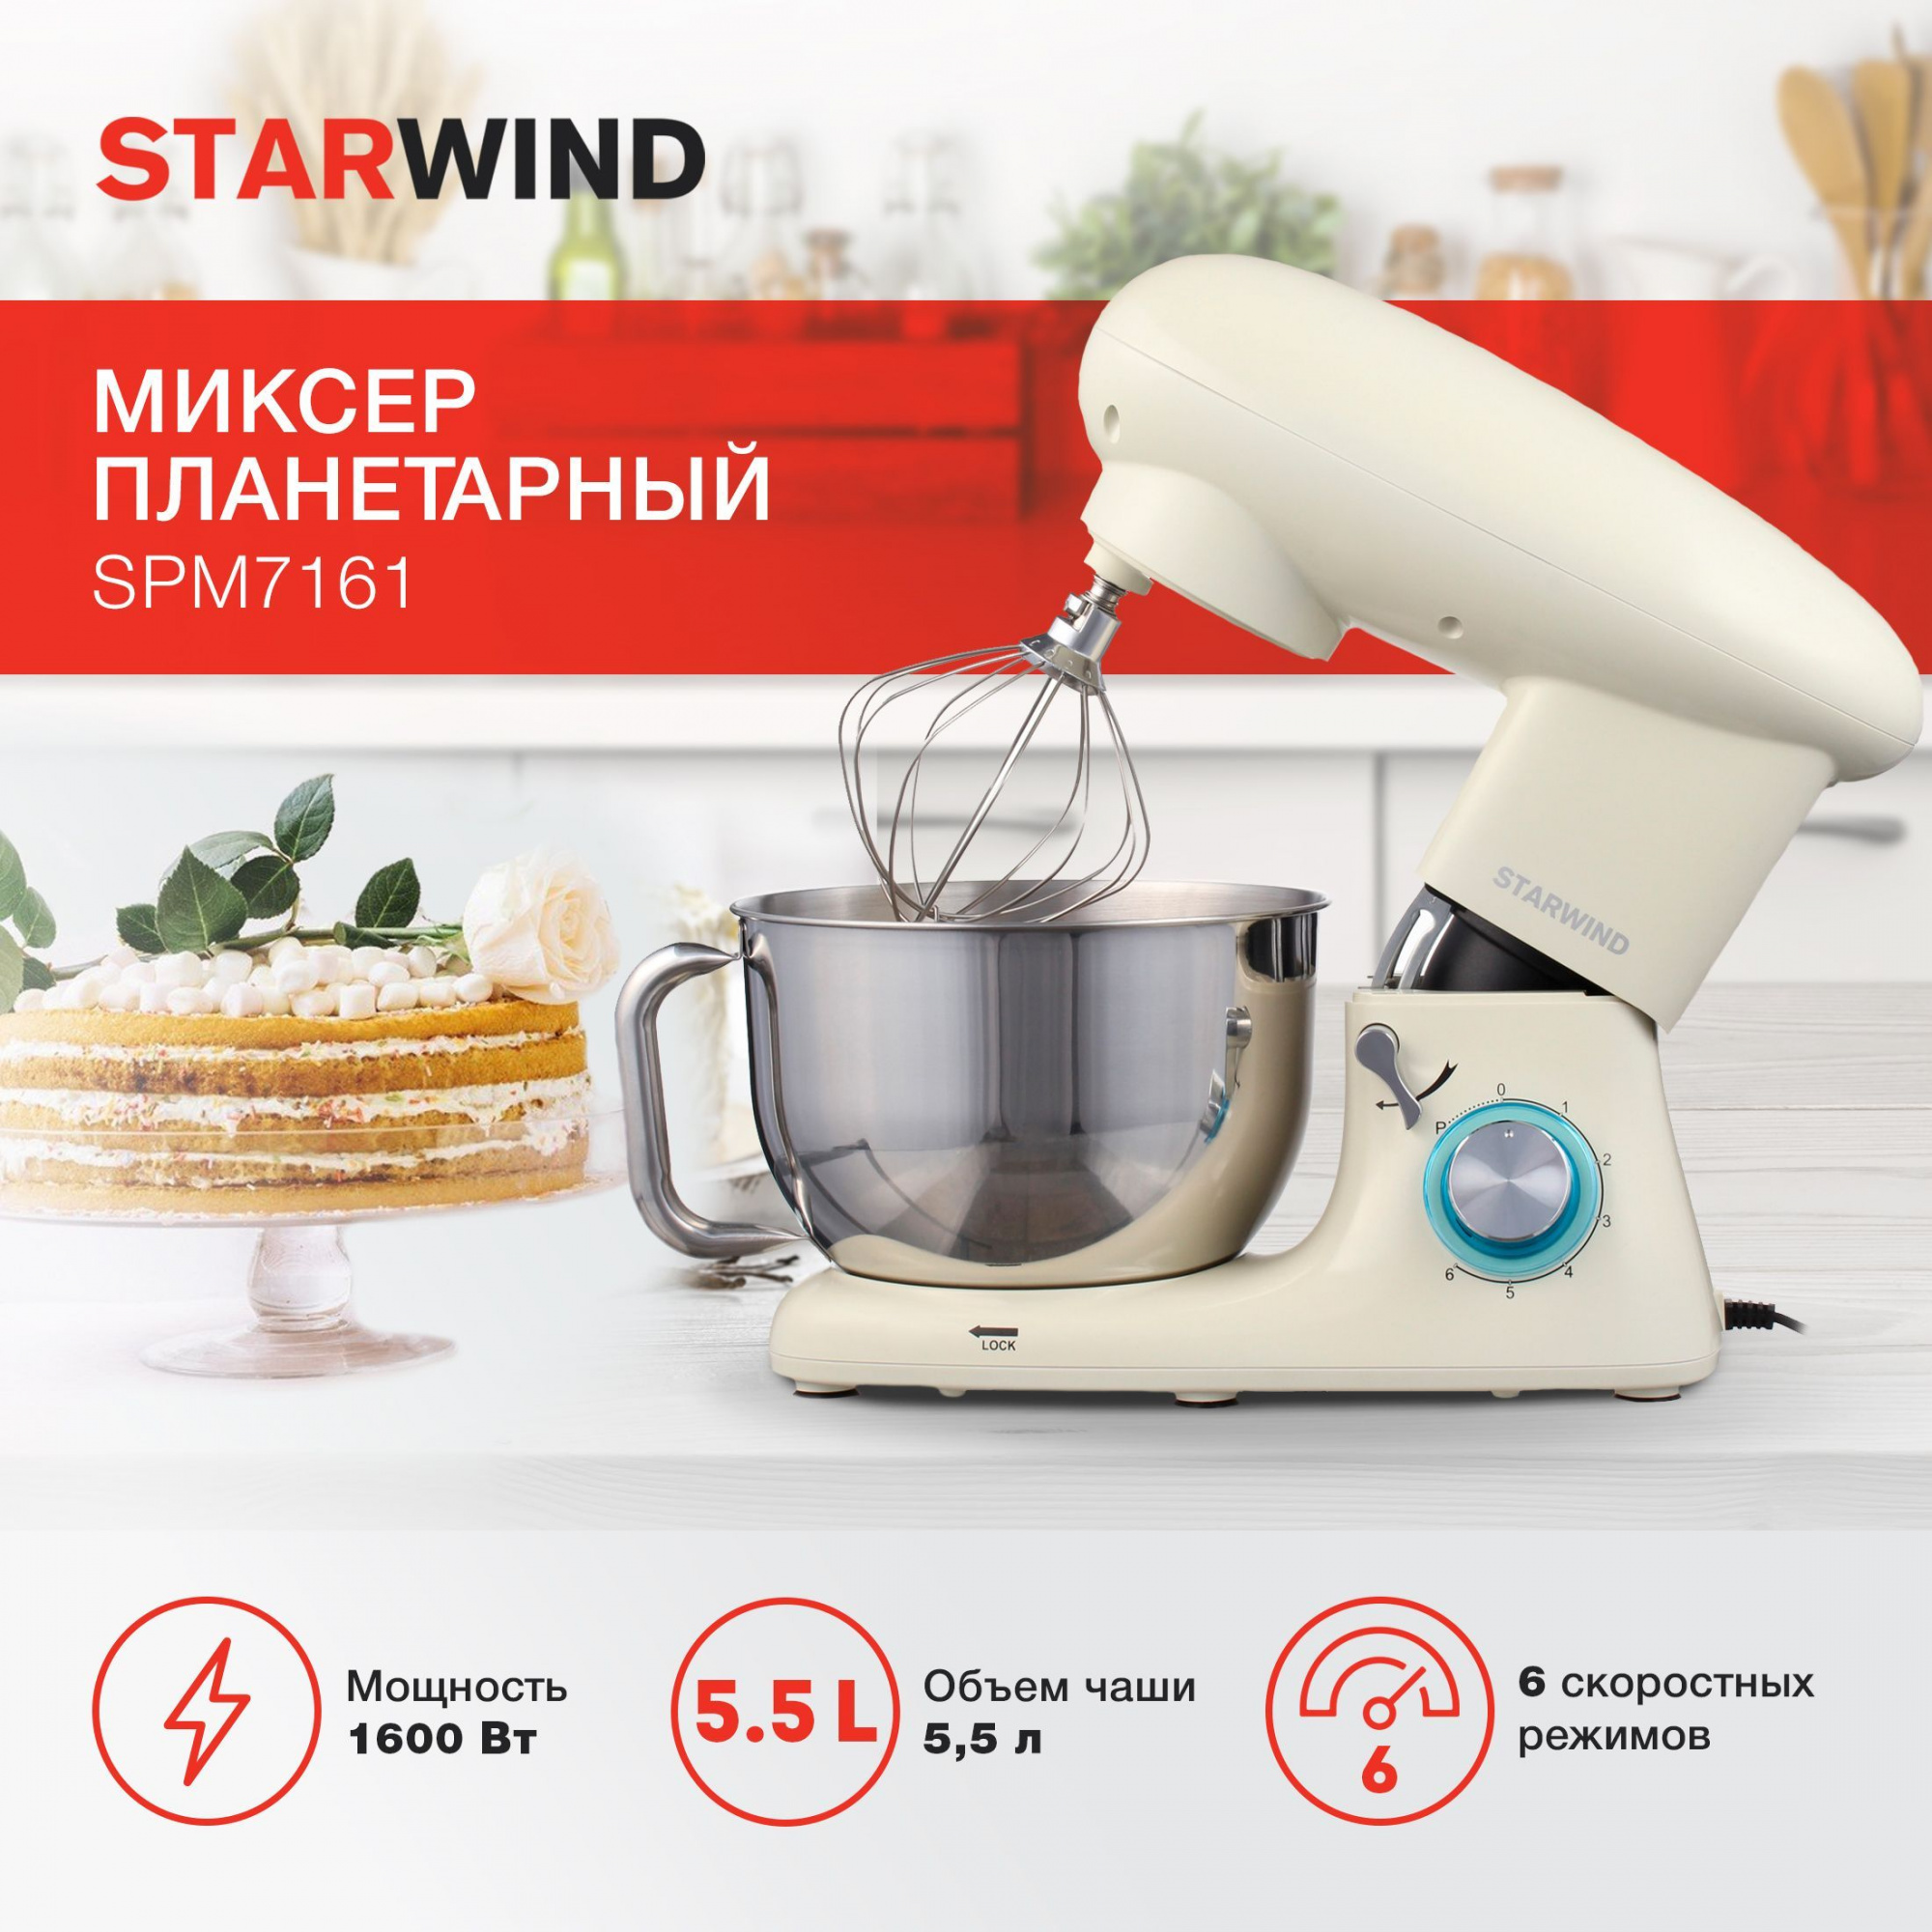 Миксер планетарный Starwind SPM7161 кремовый от магазина Старвинд